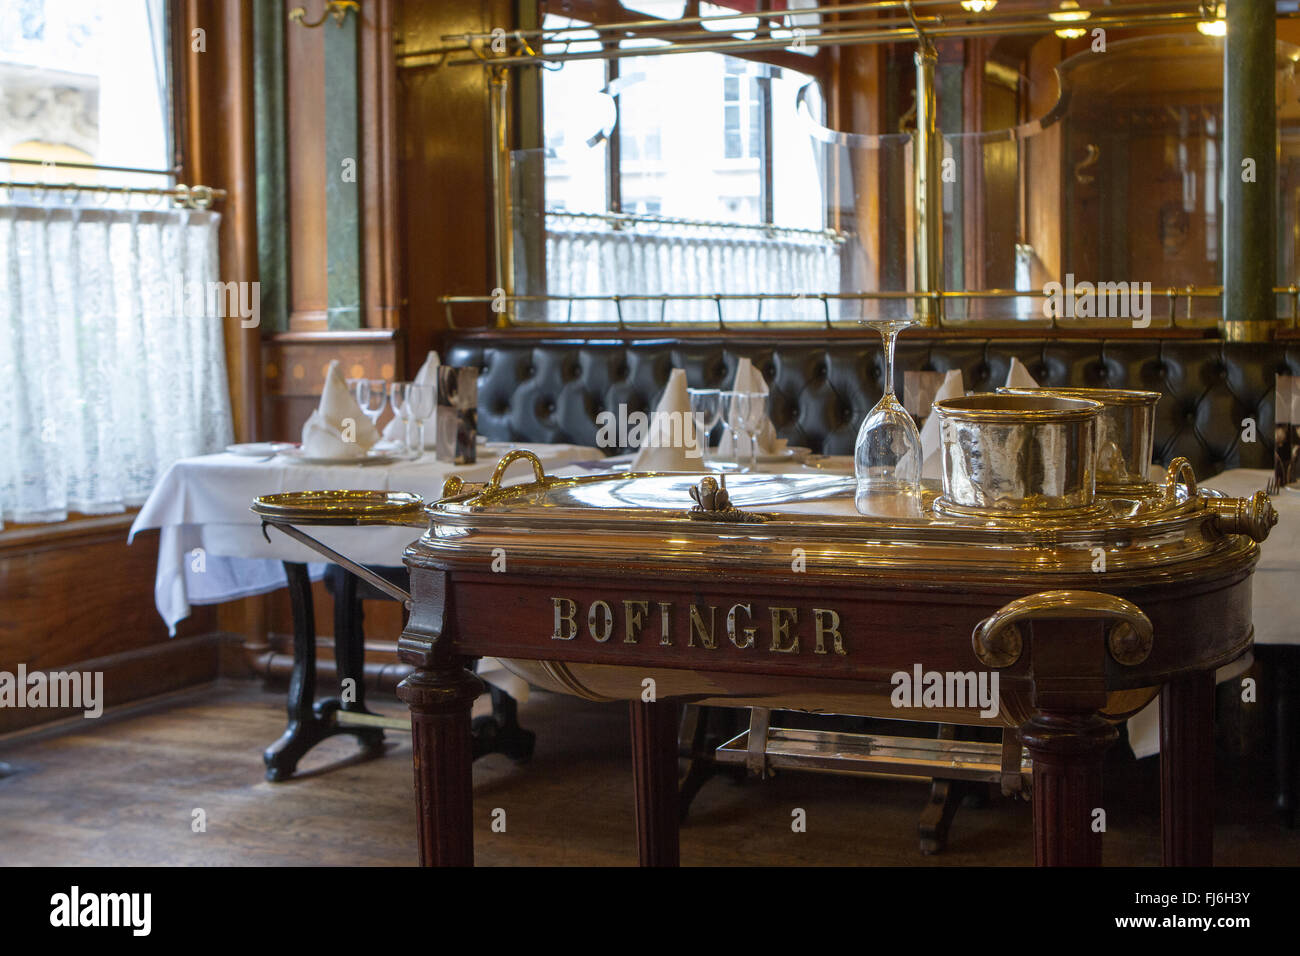 Parisian brasserie Bofinger Paris France Stock Photo